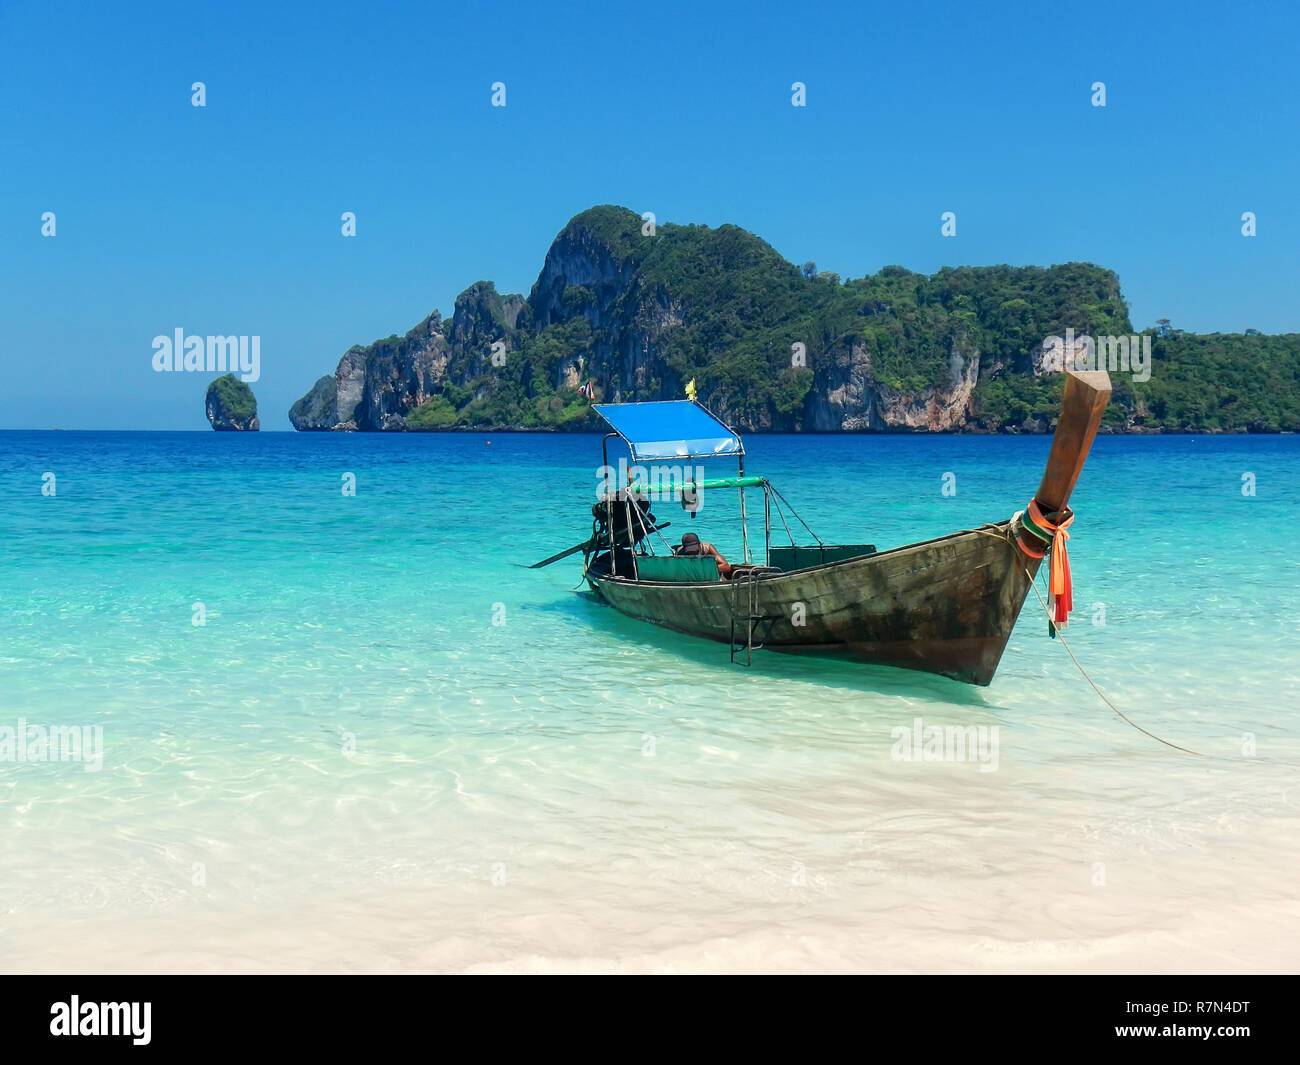 Longtail Boot bei Ao Yongkasem Strand auf Koh Phi Phi Don Island, Provinz Krabi, Thailand verankert. Koh Phi Phi Don ist ein Teil der Marine National Park. Stockfoto